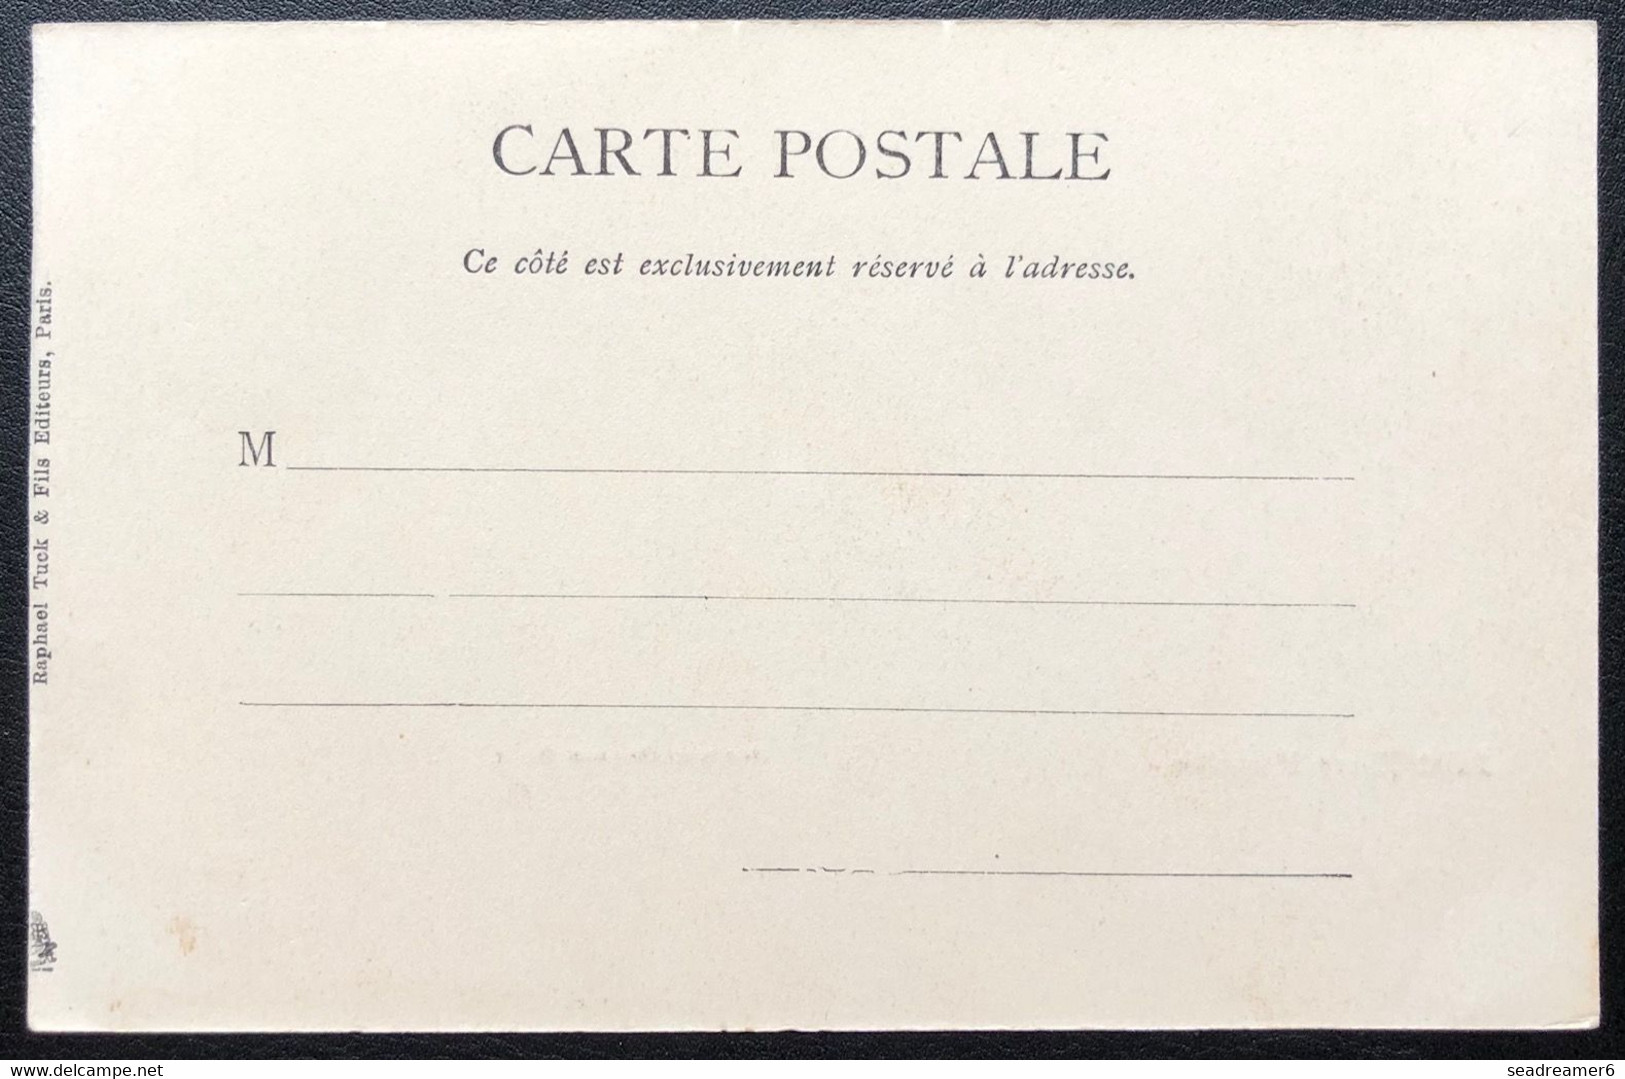 Carte Postale Originale De Saint-Pierre Et Miquelon 1900/1920 "La Rade" TTB - Saint-Pierre-et-Miquelon